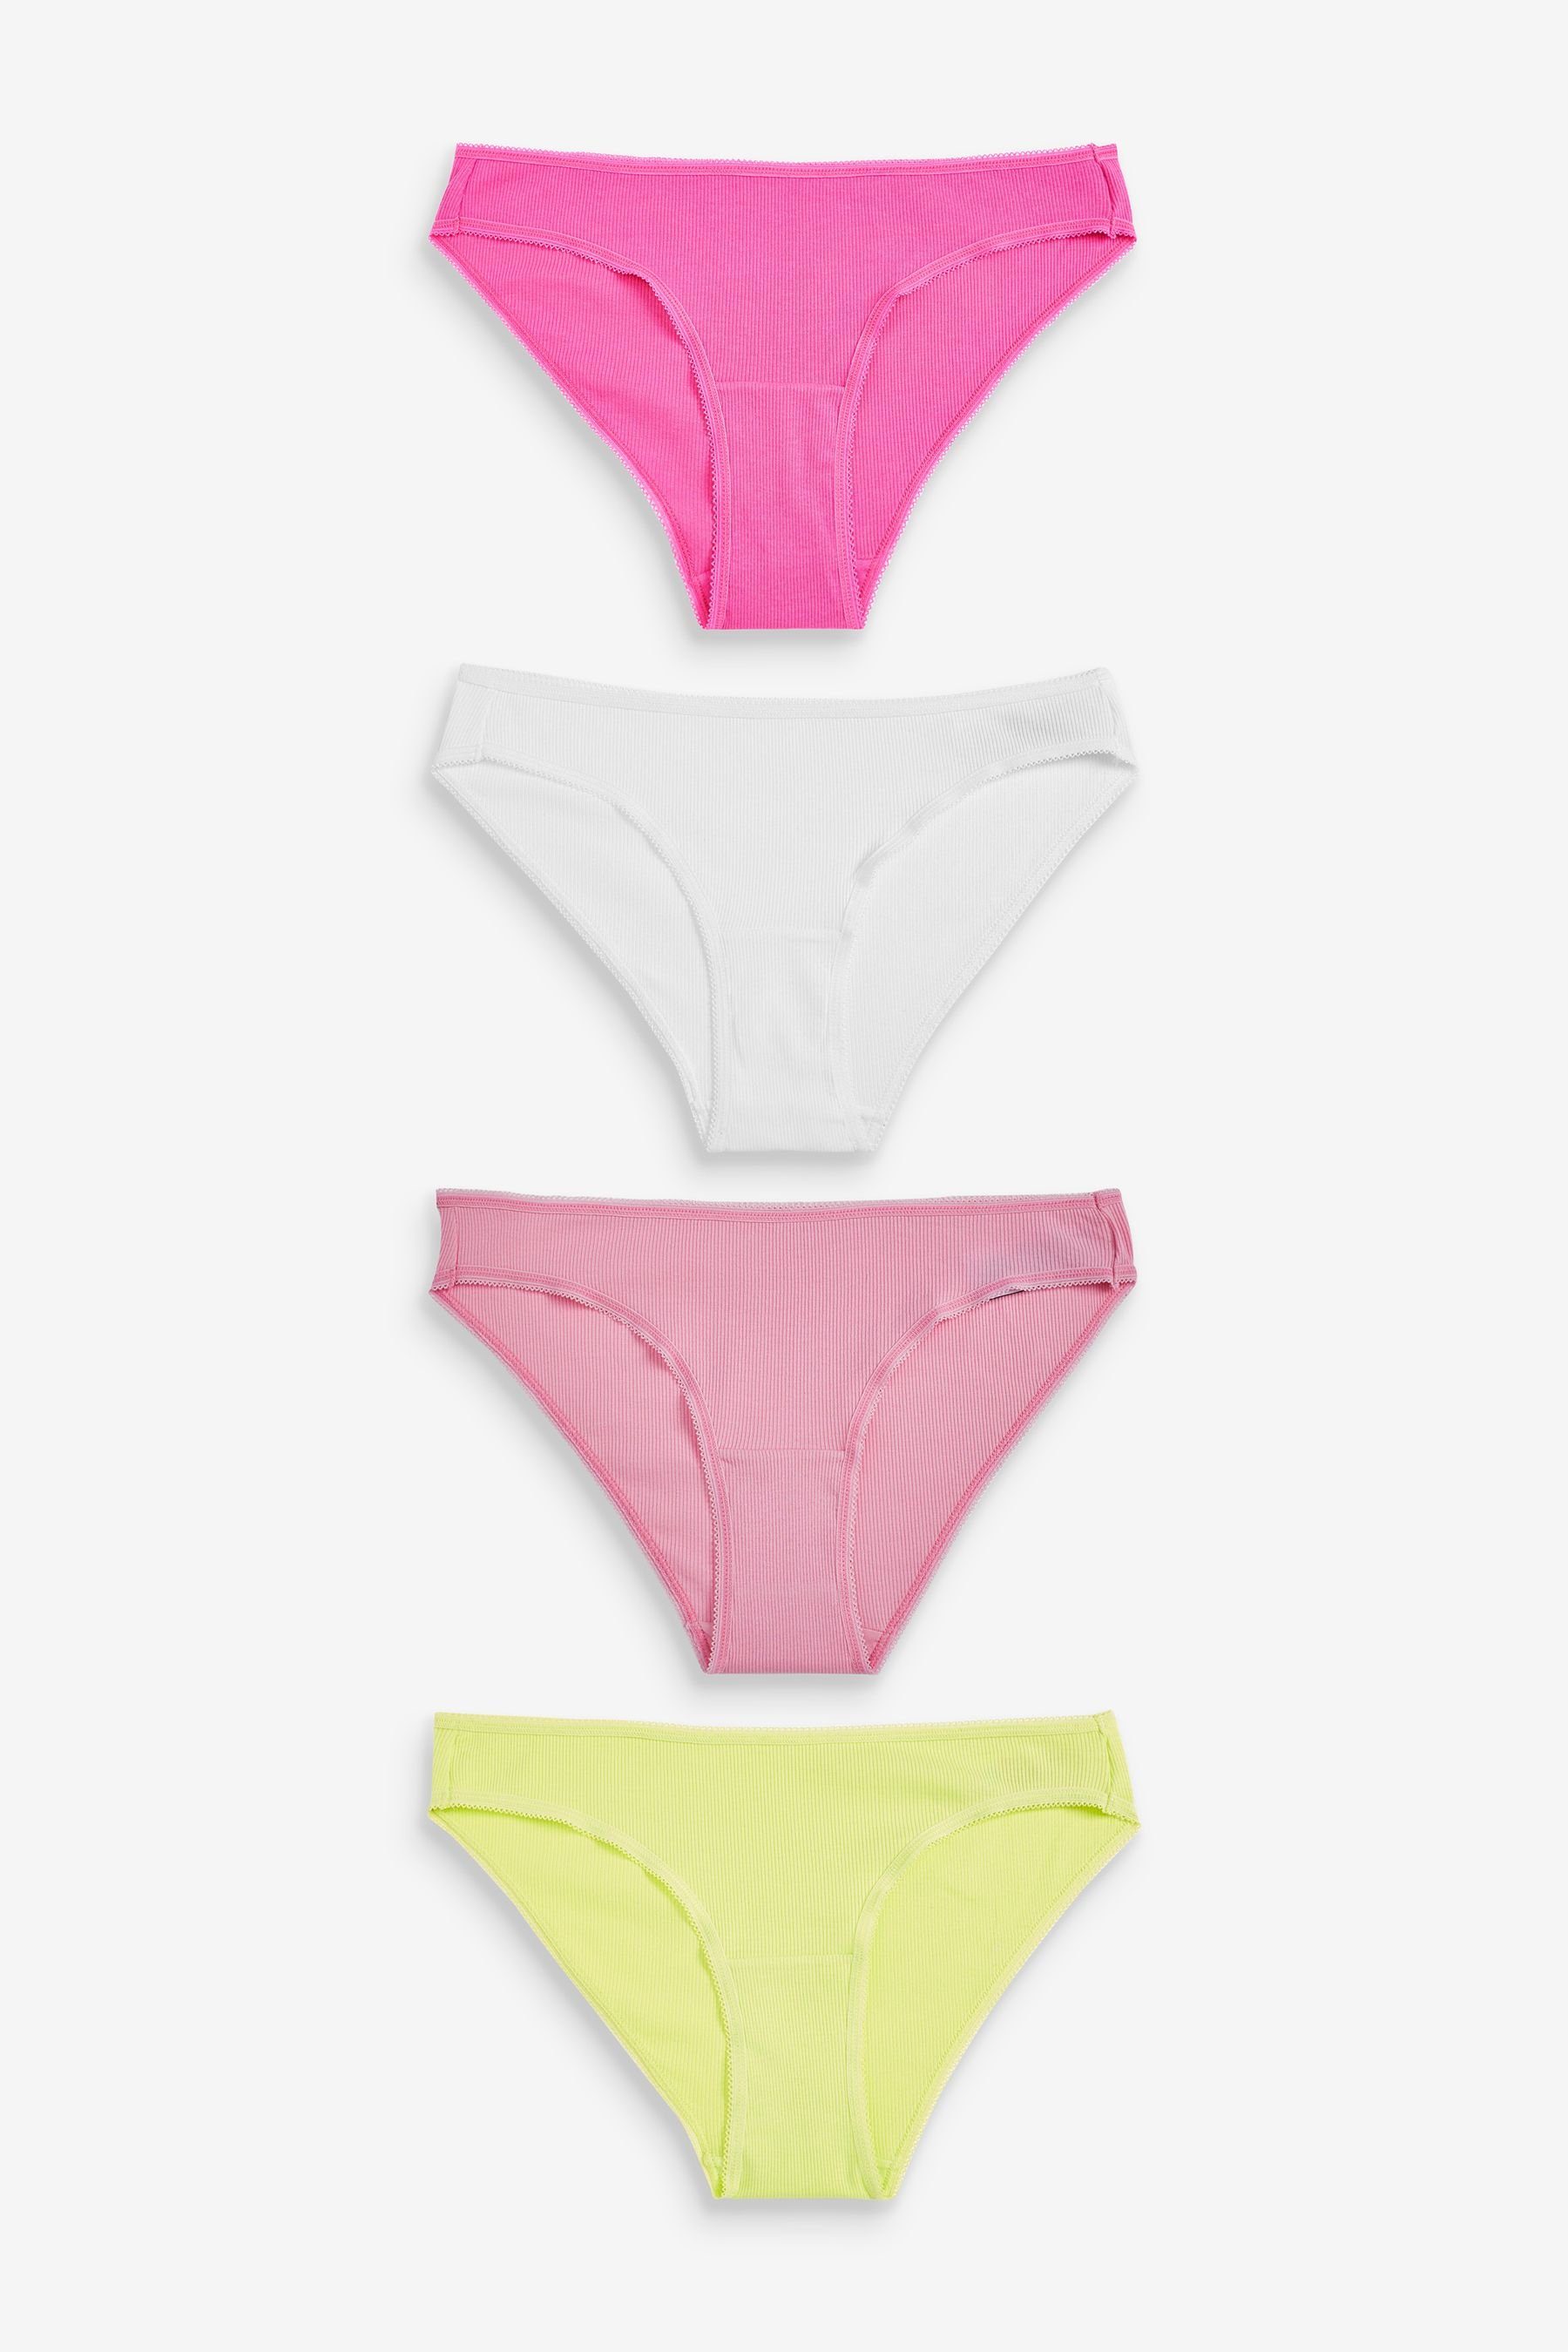 Next Bikinislip 4er-Pack Slips aus gerippter Baumwolle, Bikini (4-St) Pink/White/Lime Green